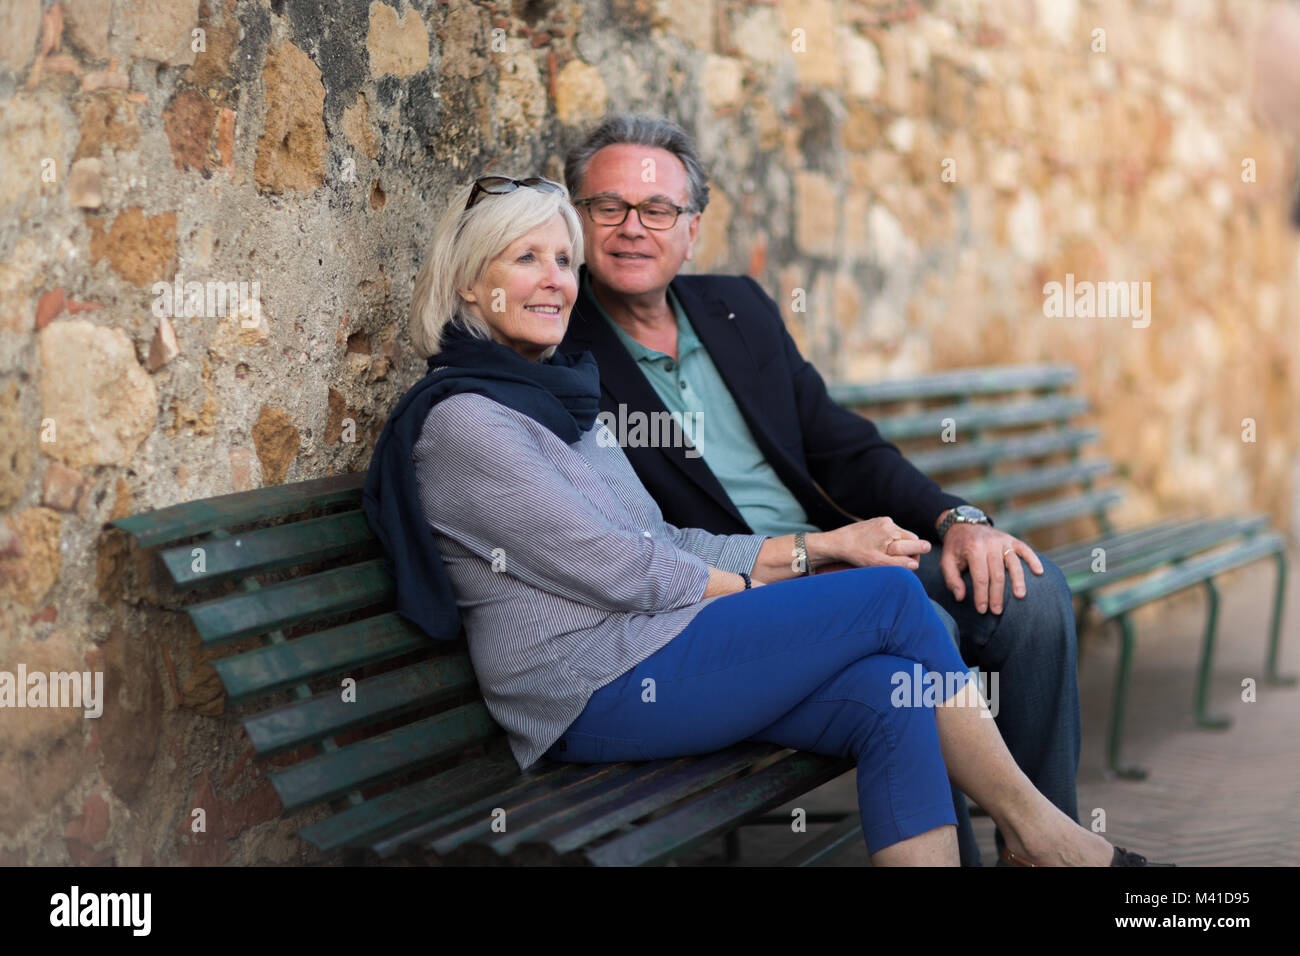 Senior couple sitting on bench relaxing Stock Photo